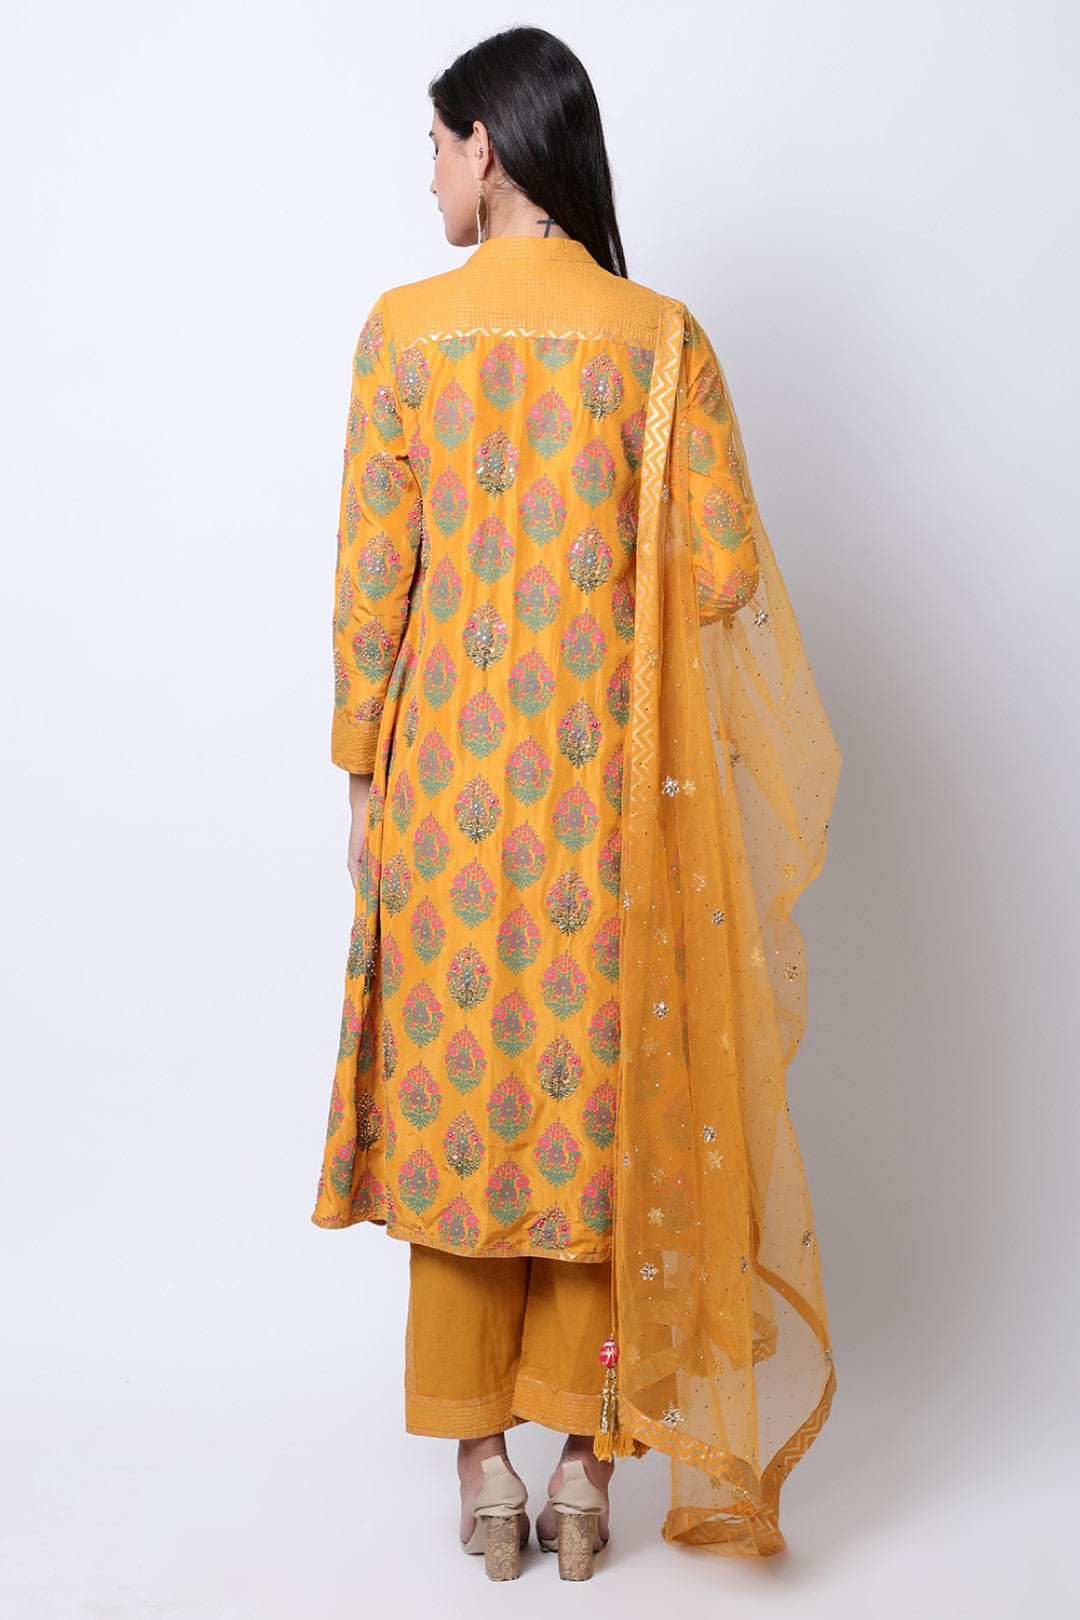 Ochre hand-printed kurta with dupatta and pants.